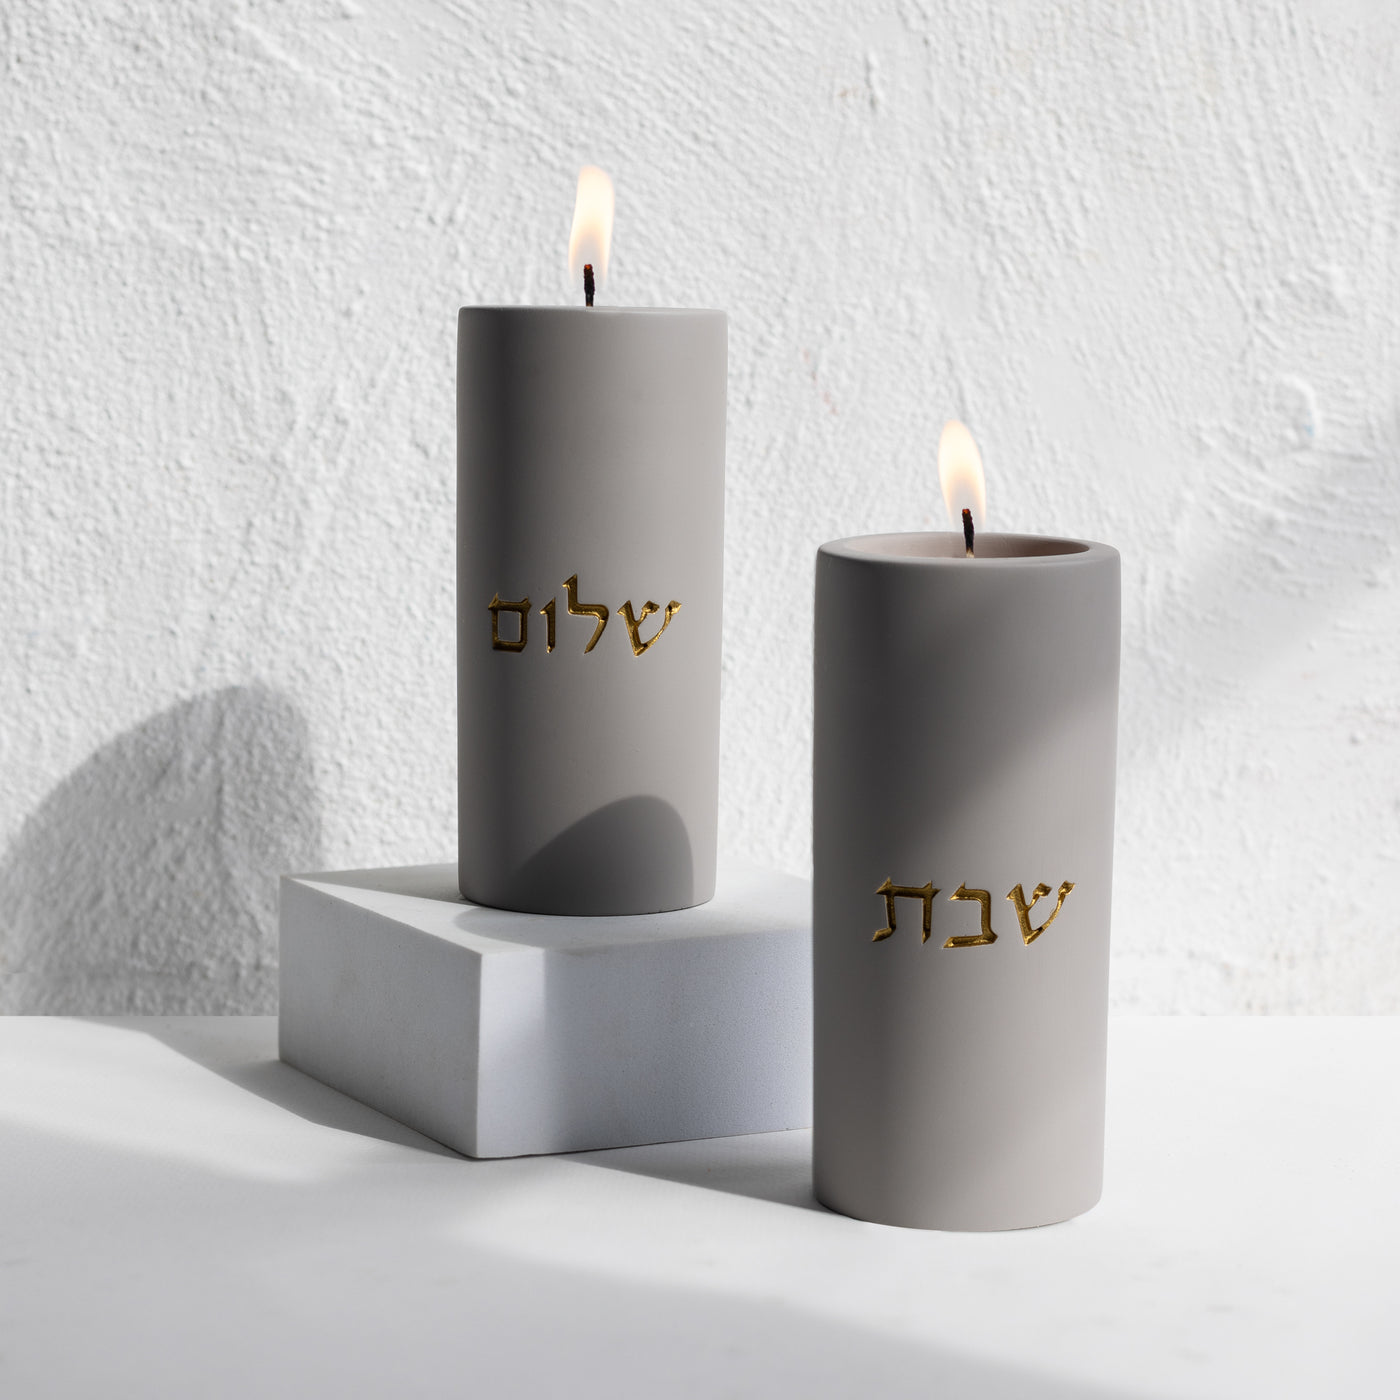 Shabbat Candlesticks in Natural Concrete Gray Color - Concrete